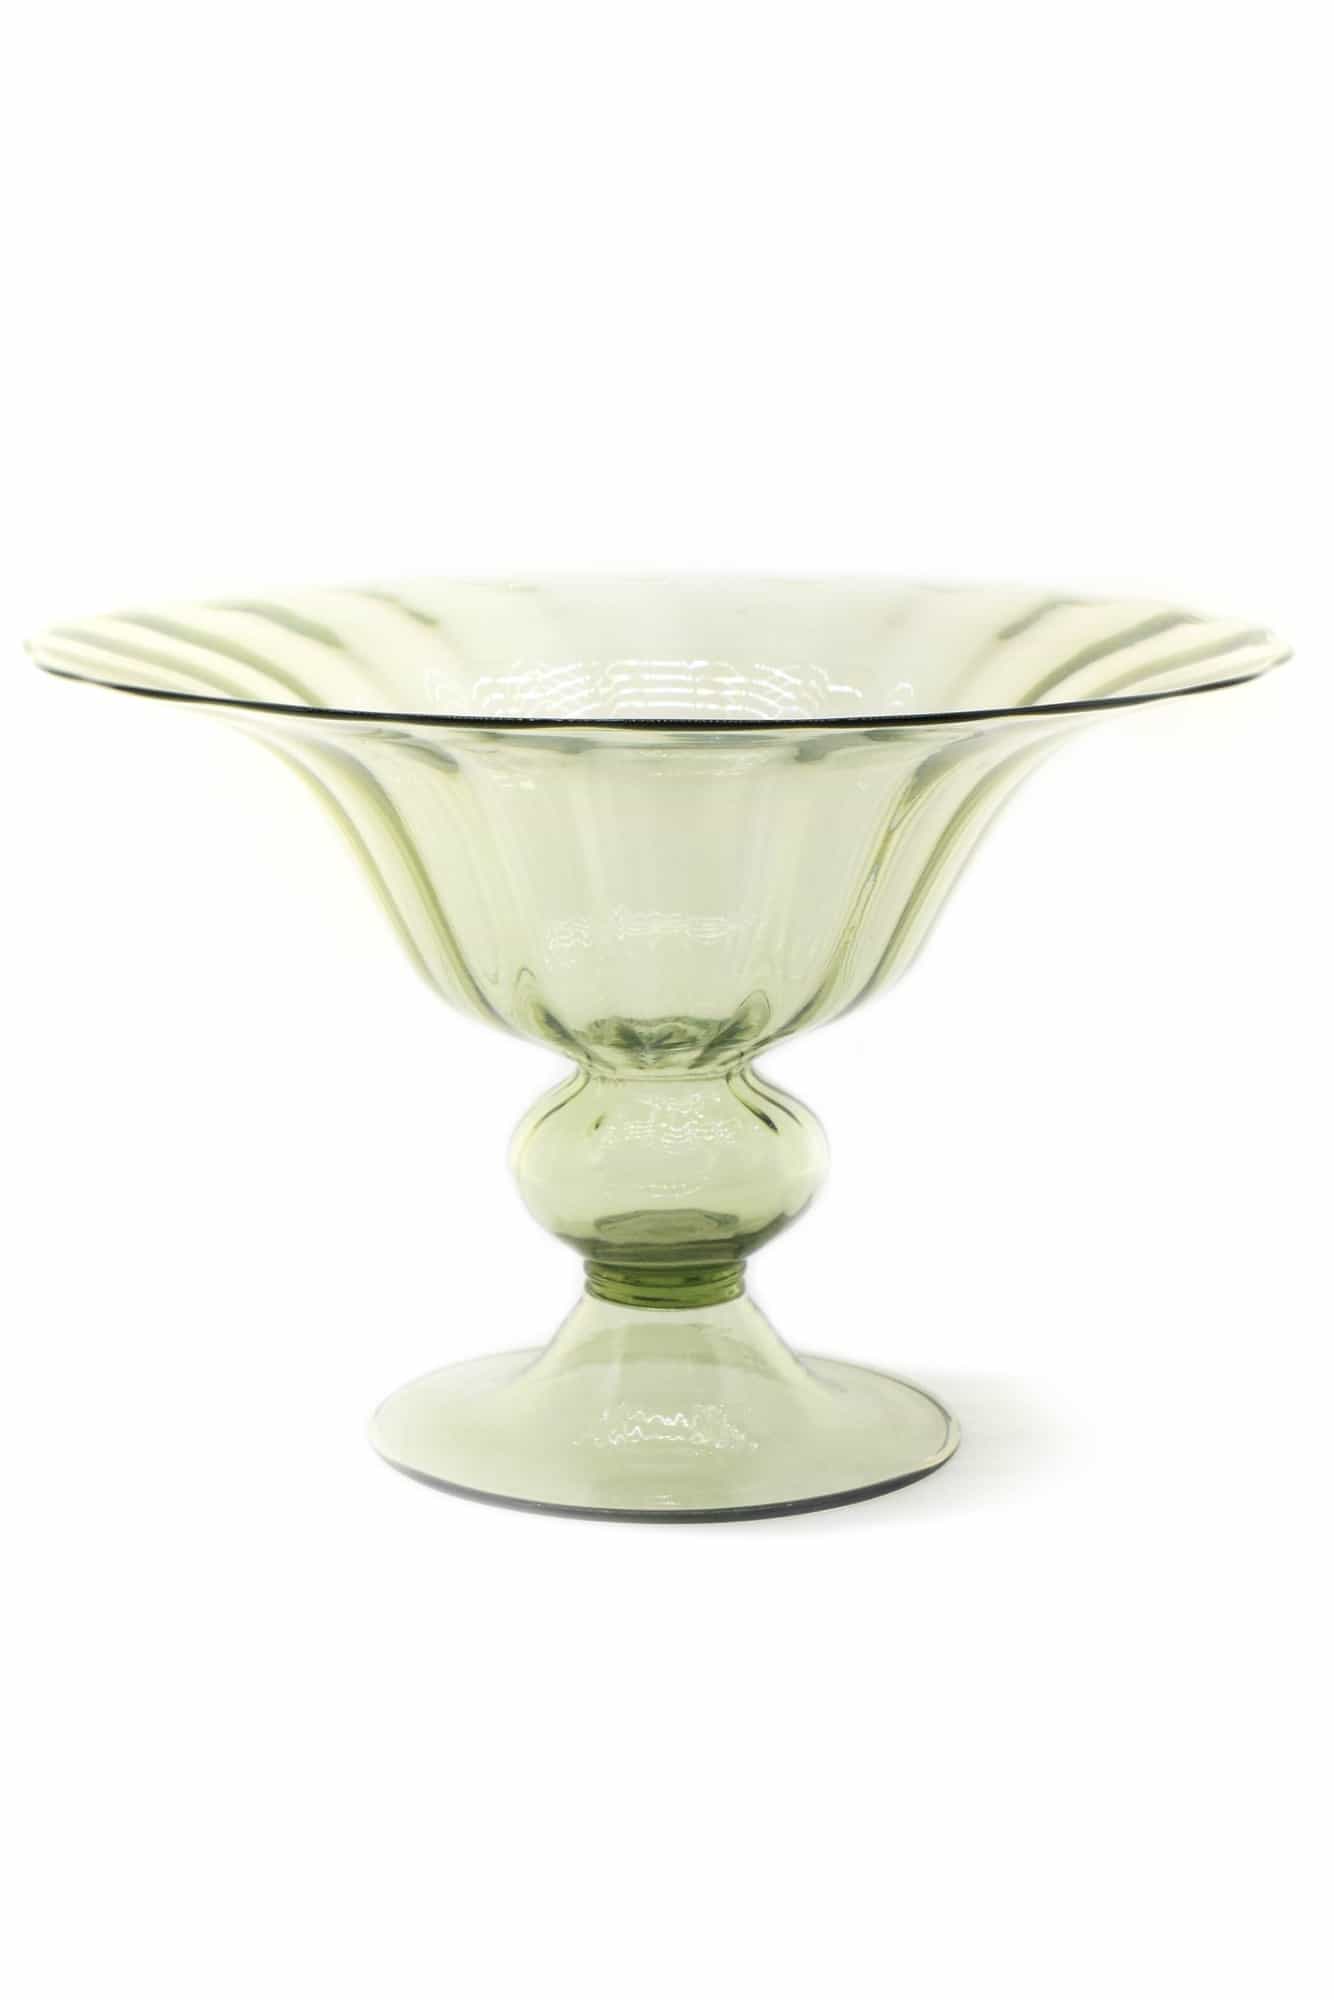 Vintage Murano glass centerpiece bowl